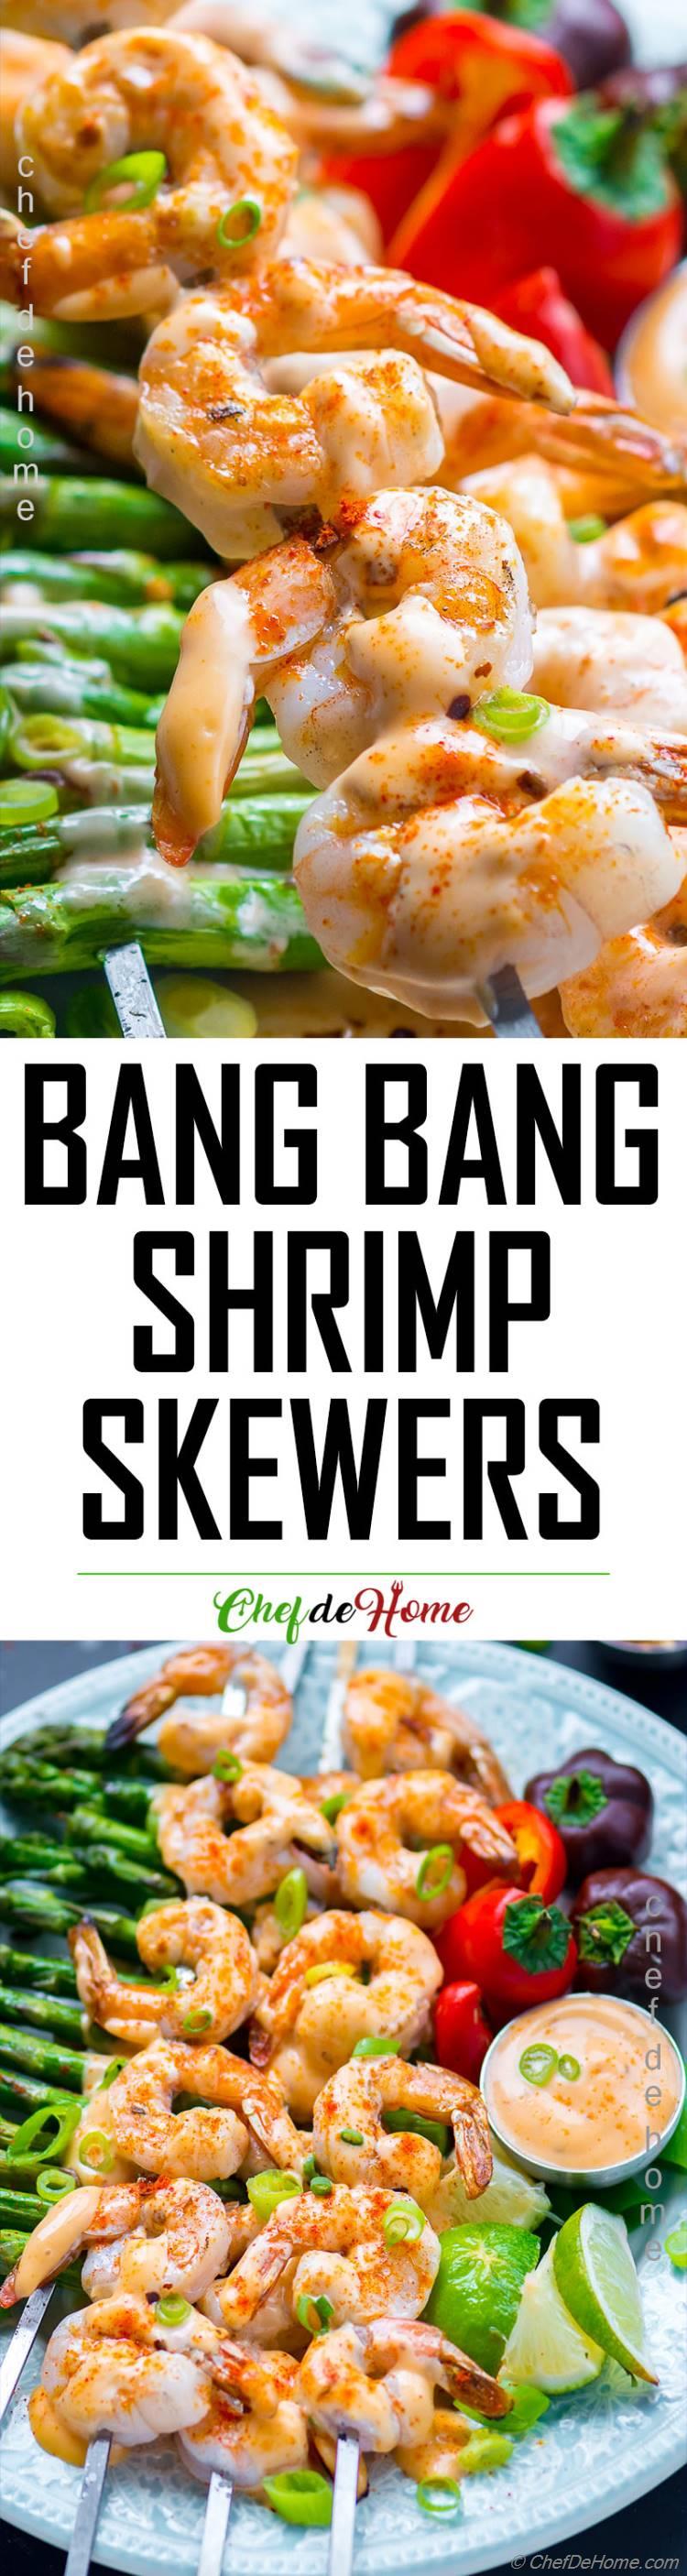 Bang Bang Shrimp Skewers Recipe Via Chefdehome